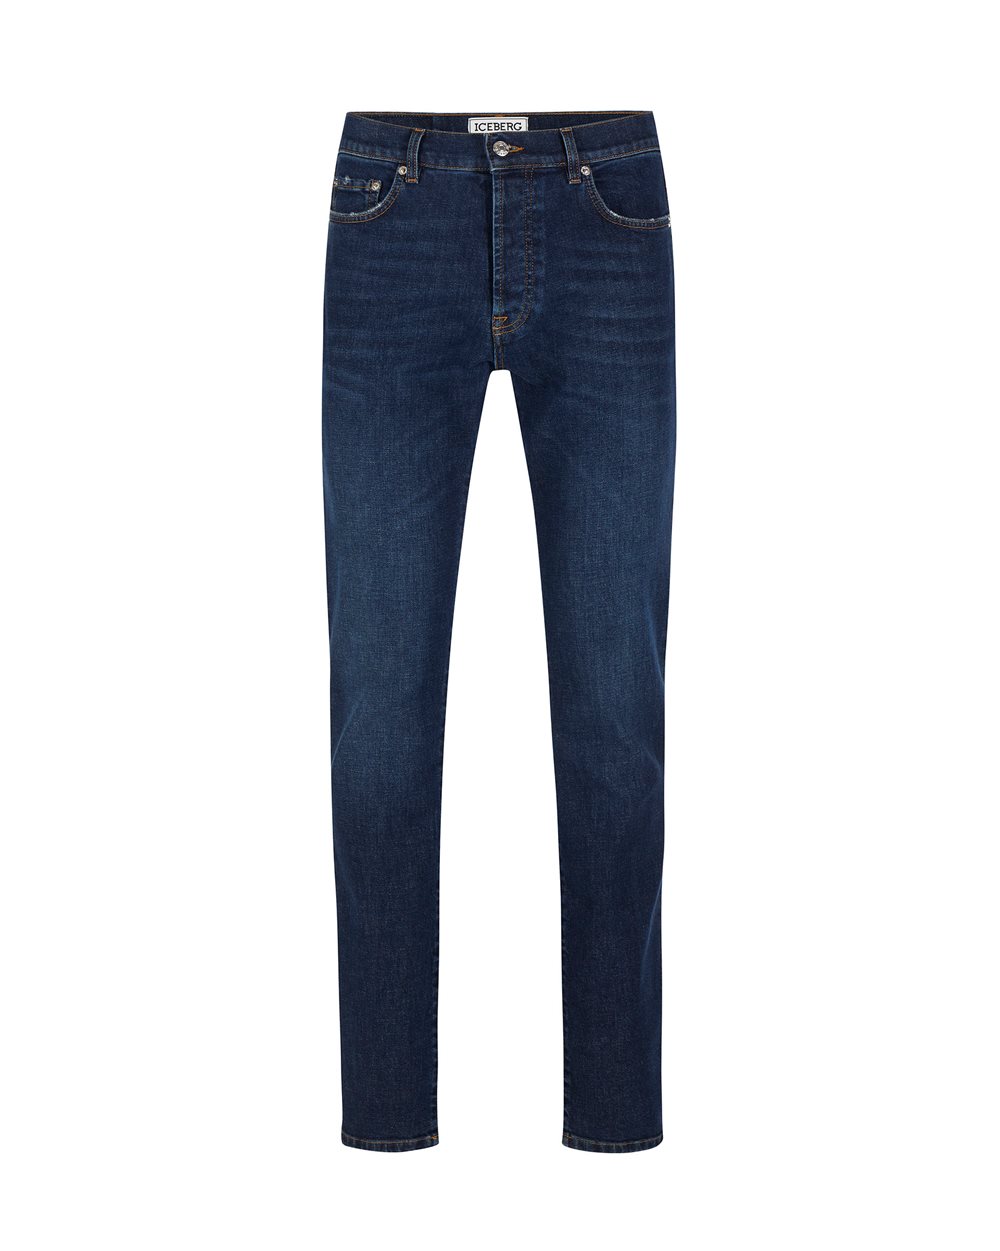 Classic 5-pocket blue jeans | Iceberg - Official Website